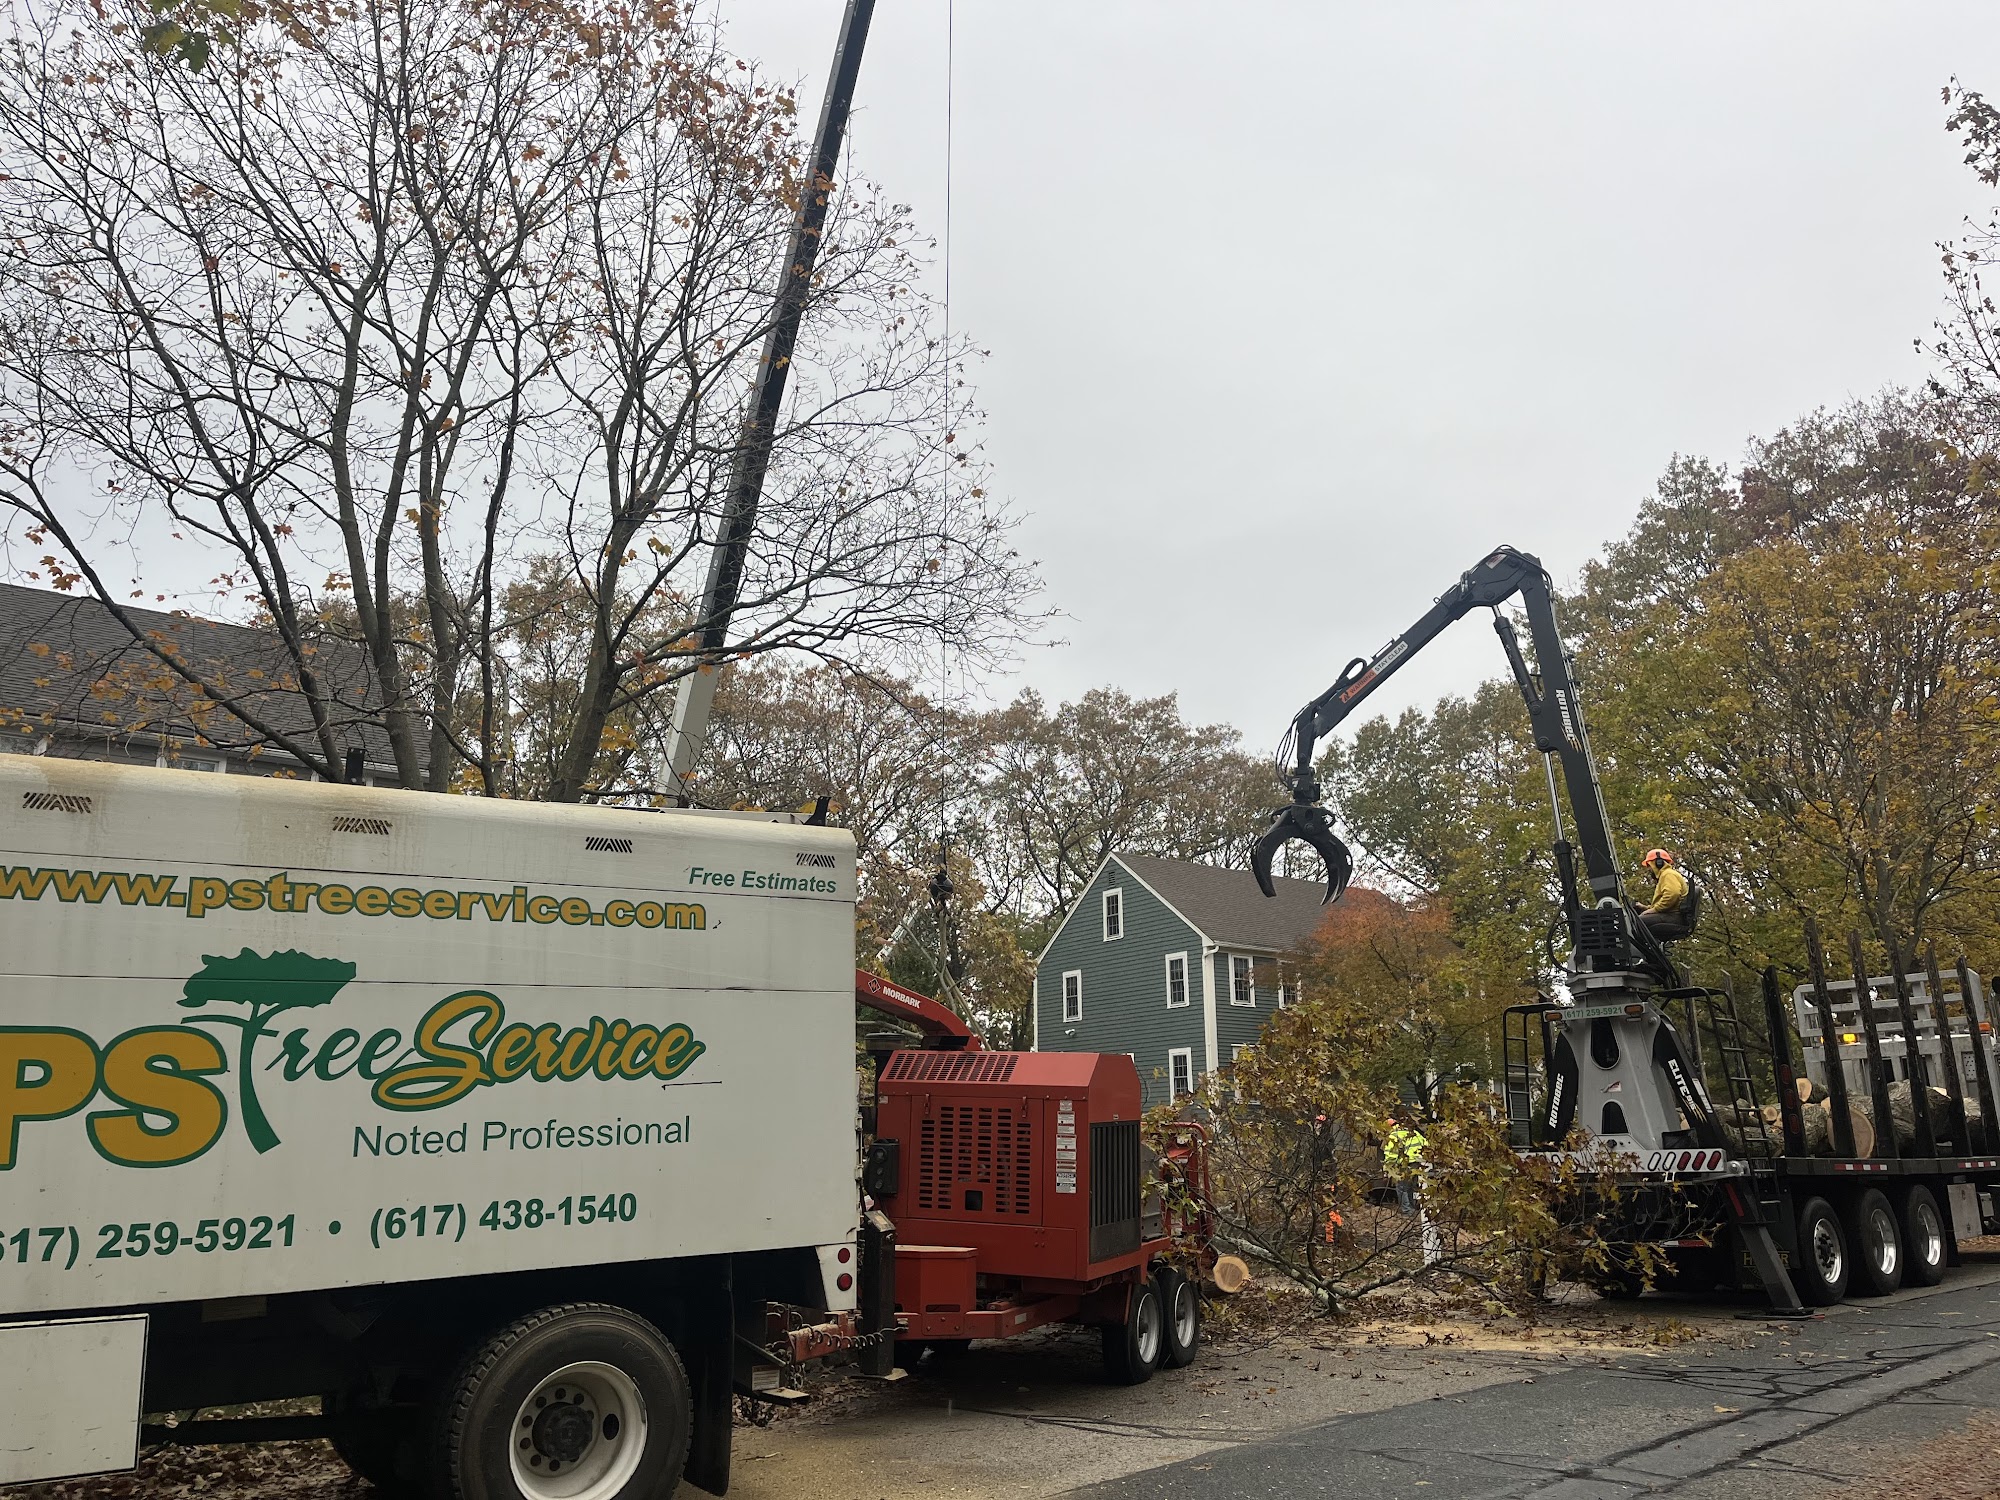 Ps Tree Service, Inc 616 South St, Holbrook Massachusetts 02343